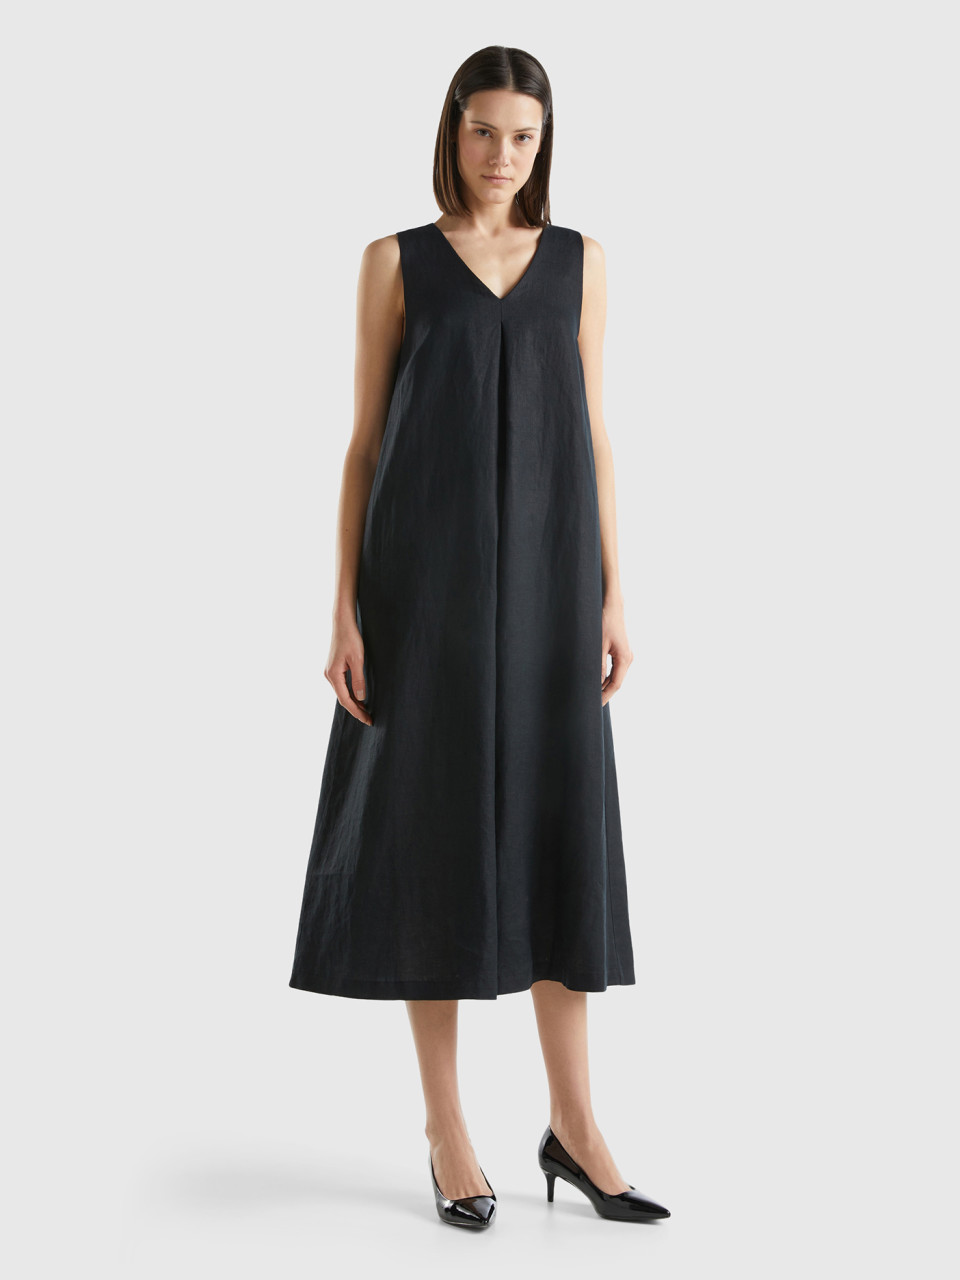 Benetton, Sleeveless Dress In Pure Linen, Black, Women